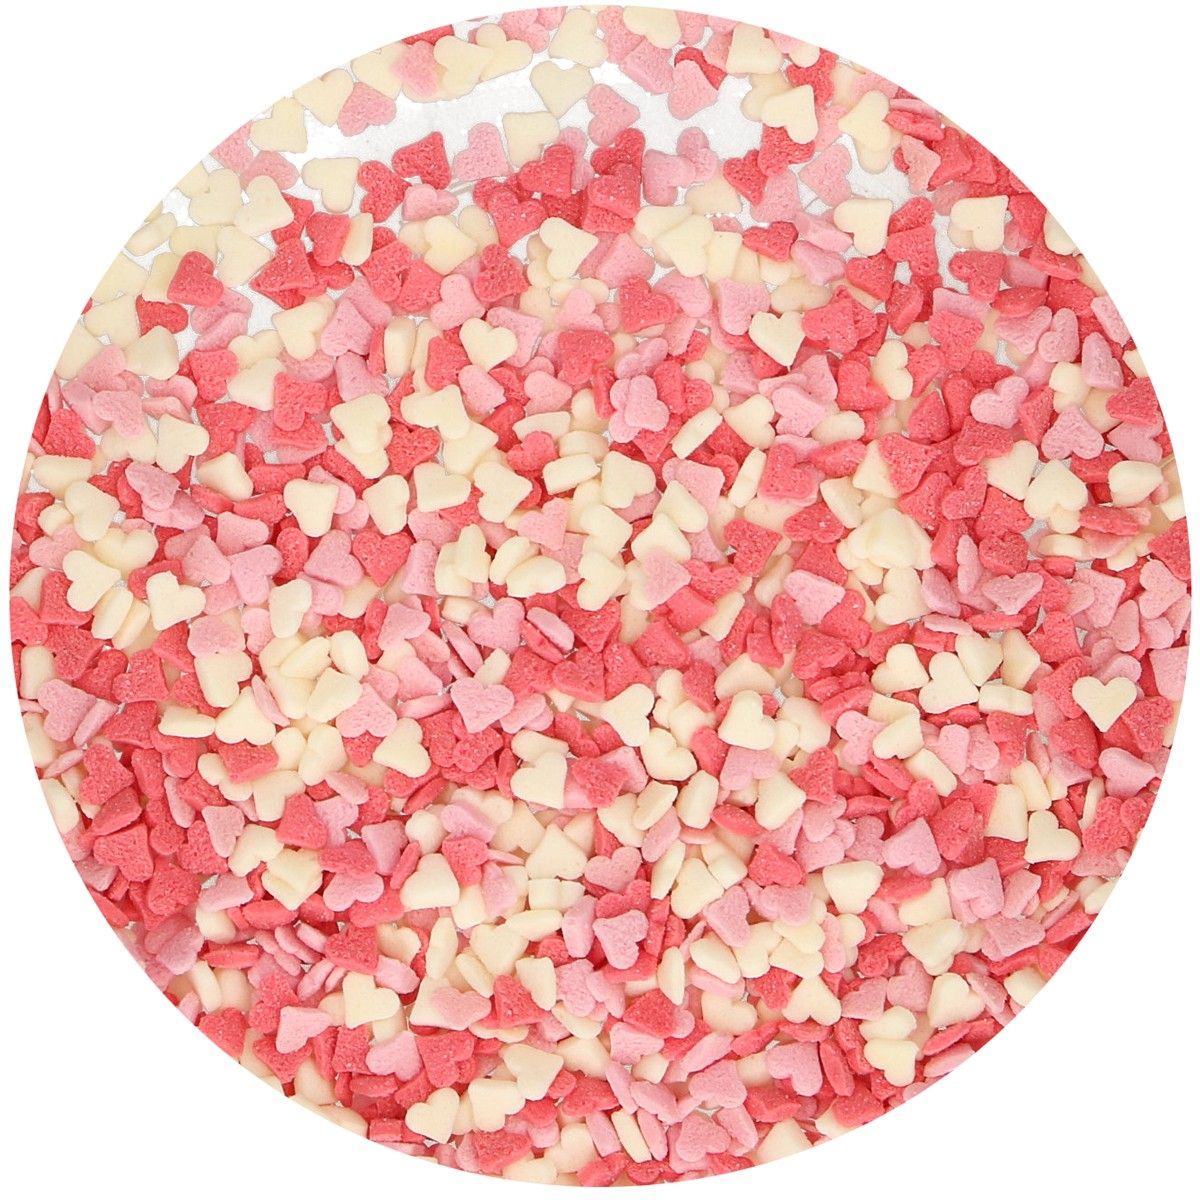 Funcakes mini hearts pink/white/red 60g